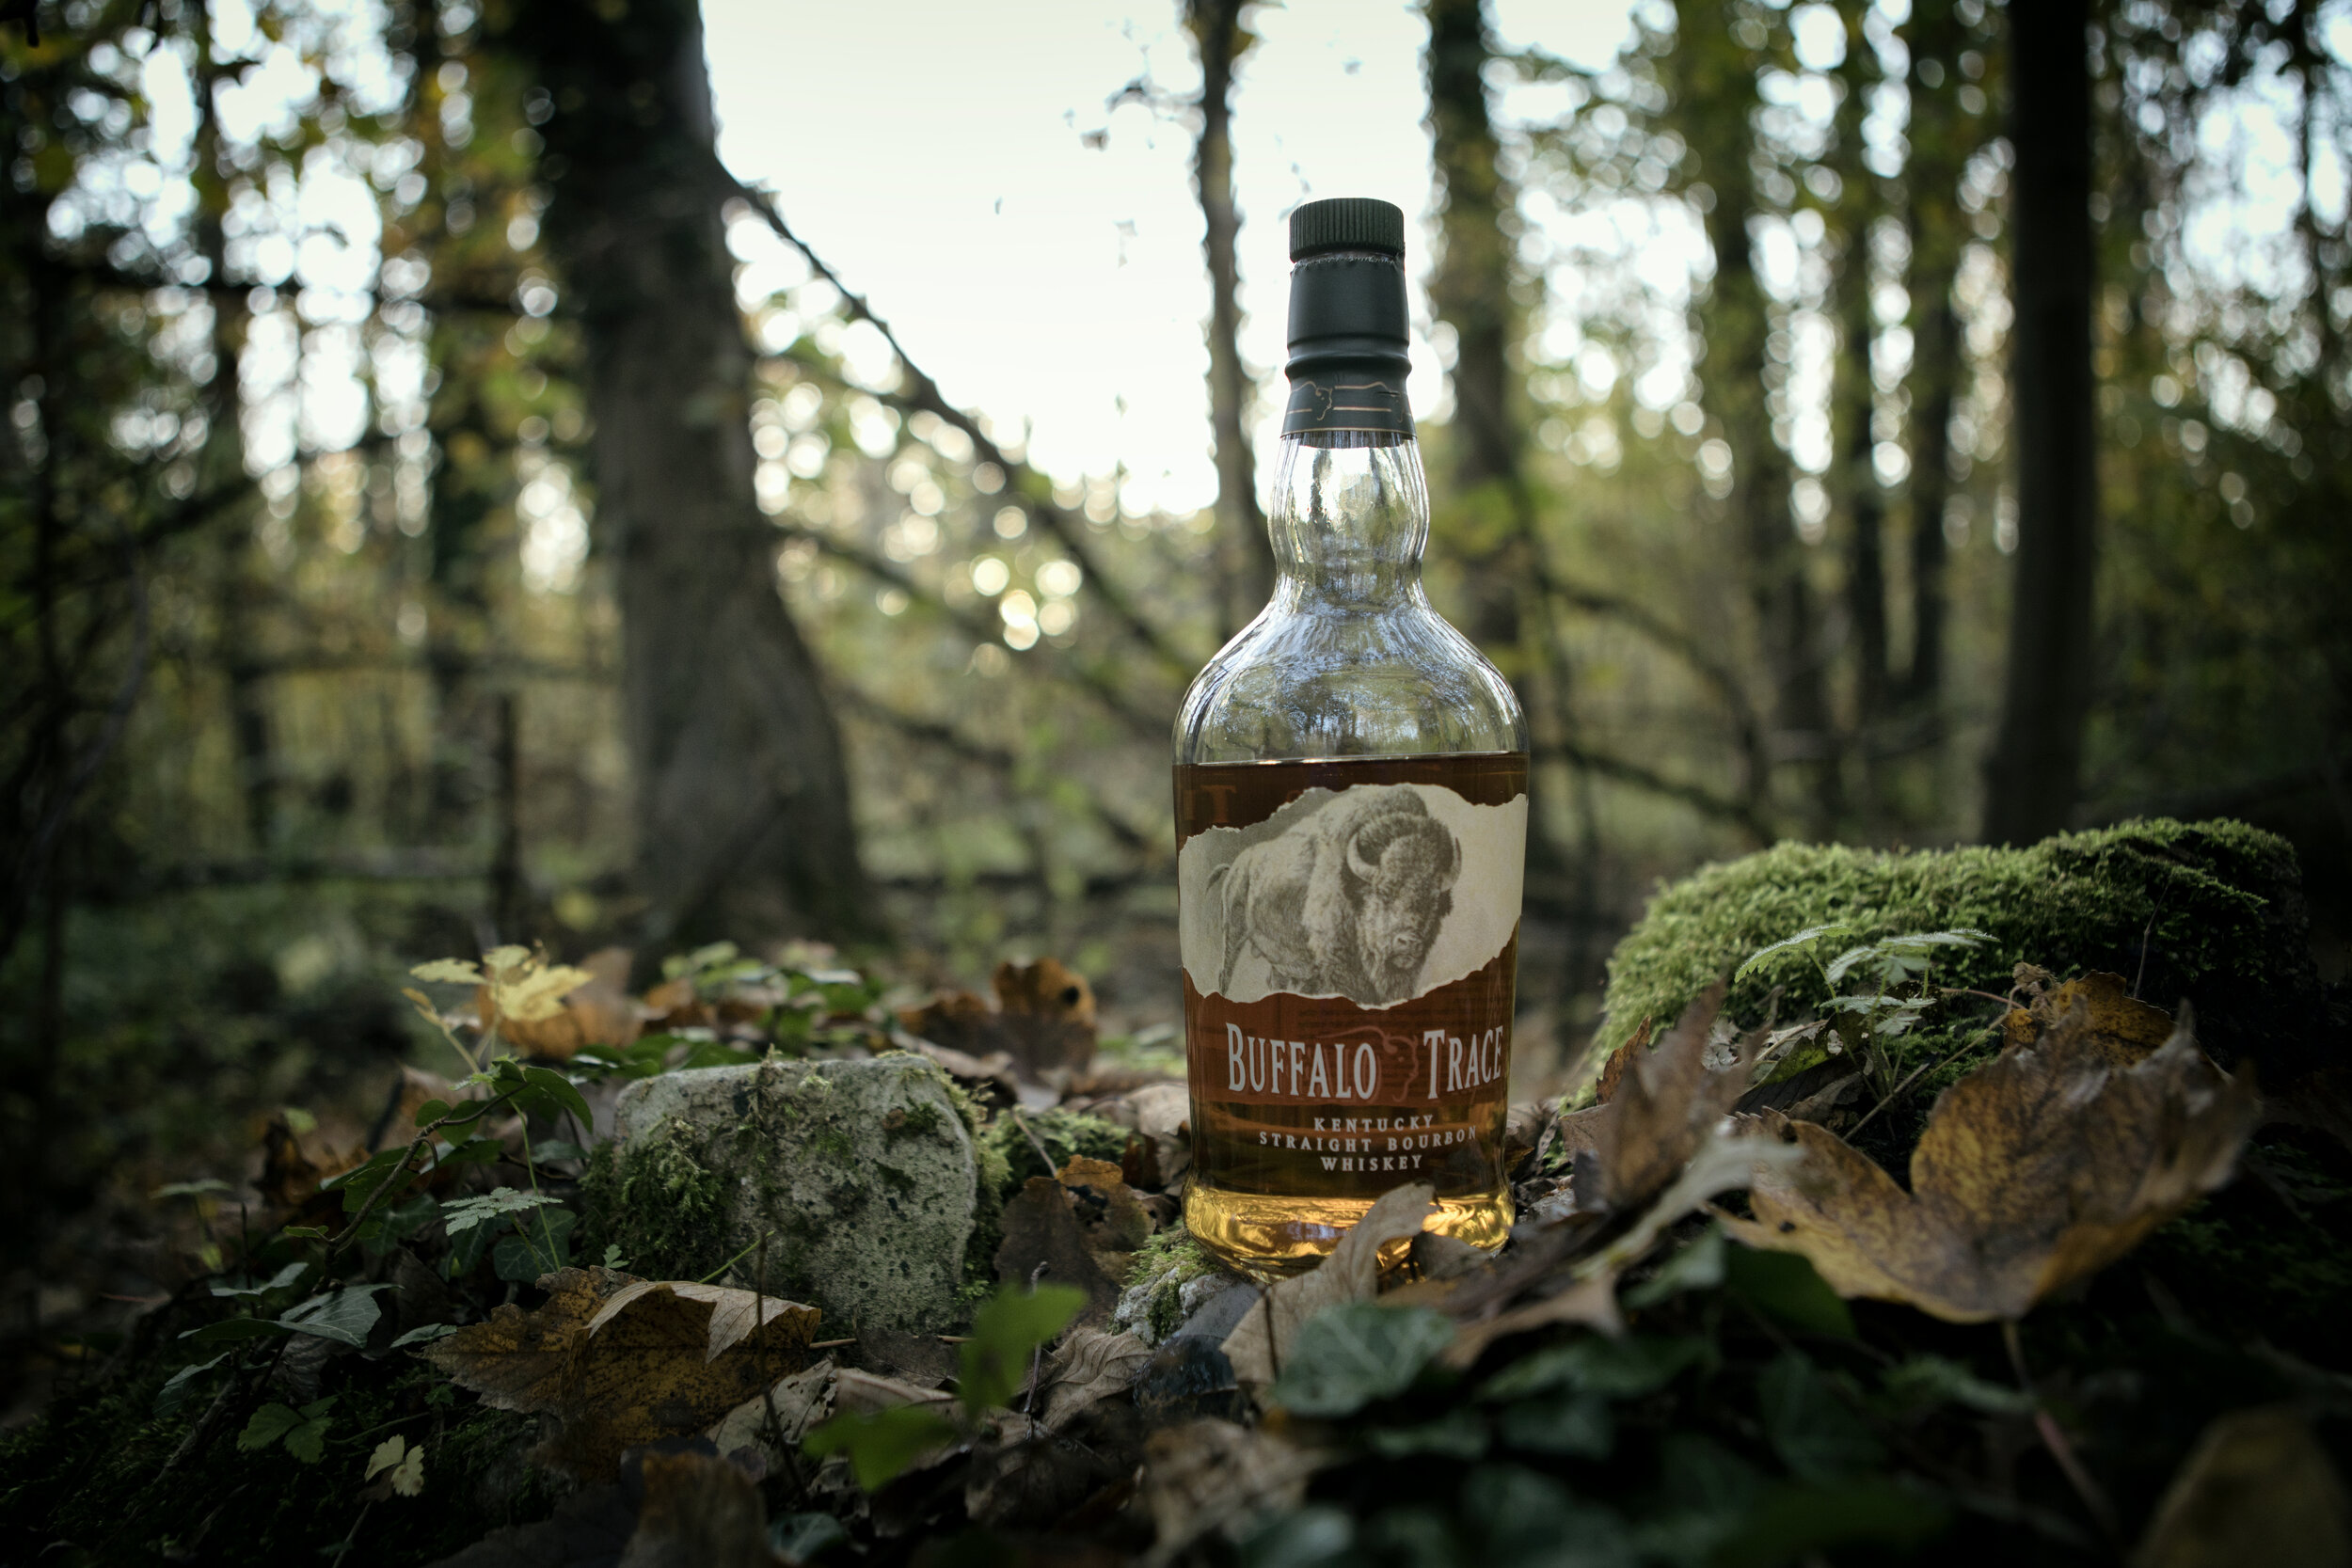 Bourbon Season 2020 - Part 2 // Buffalo Trace Kentucky Straight Bourbon  Whiskey — The Campfire Dram